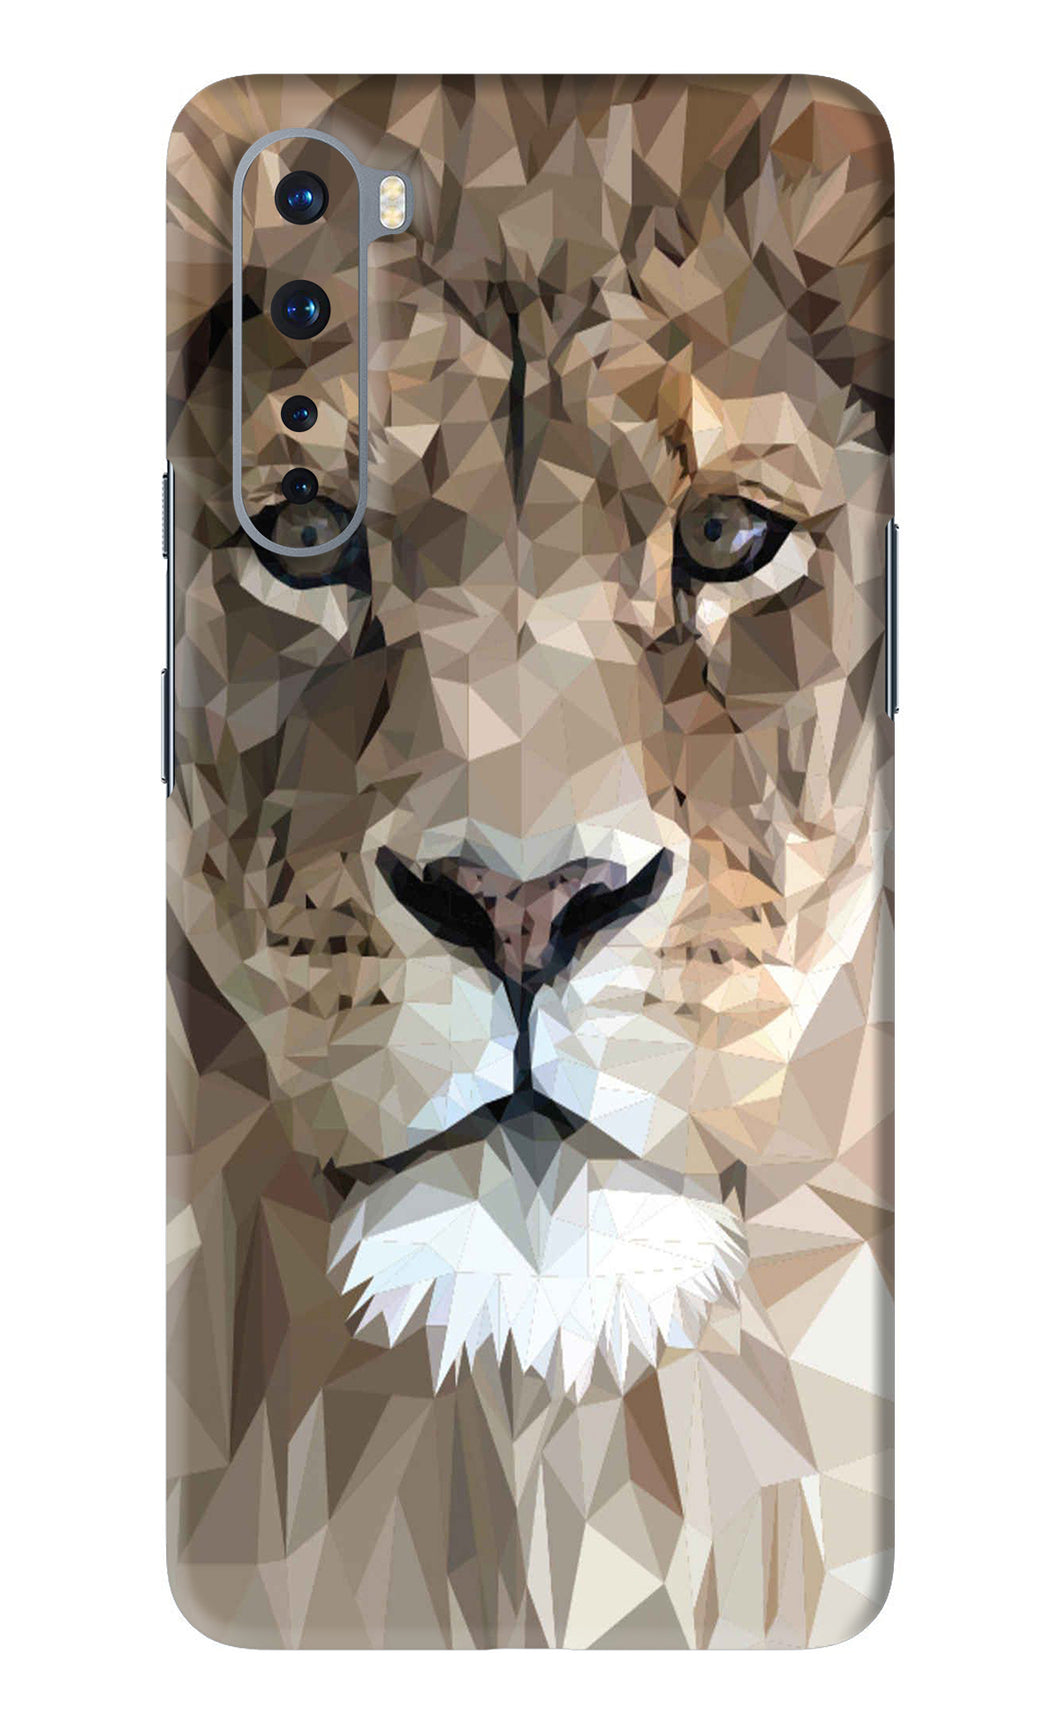 Lion Art OnePlus Nord Back Skin Wrap